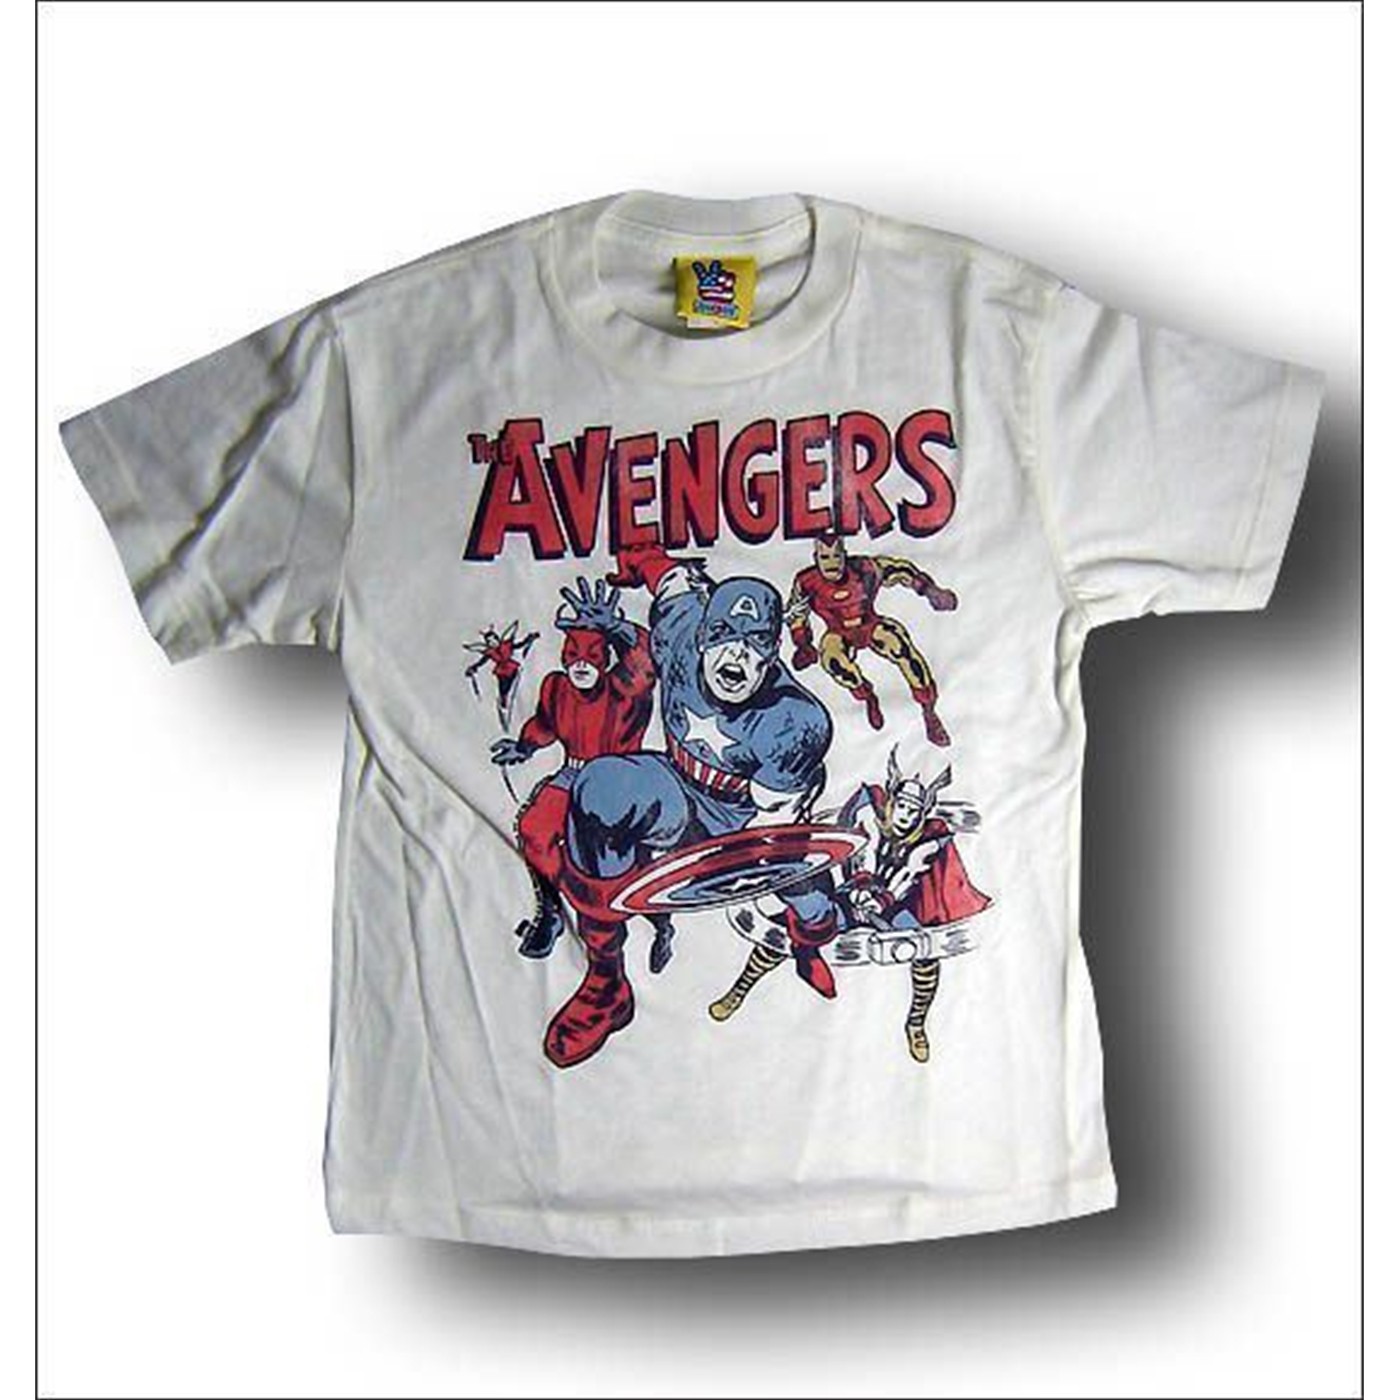 Avengers Original Juvenile T-Shirt by Junk Food